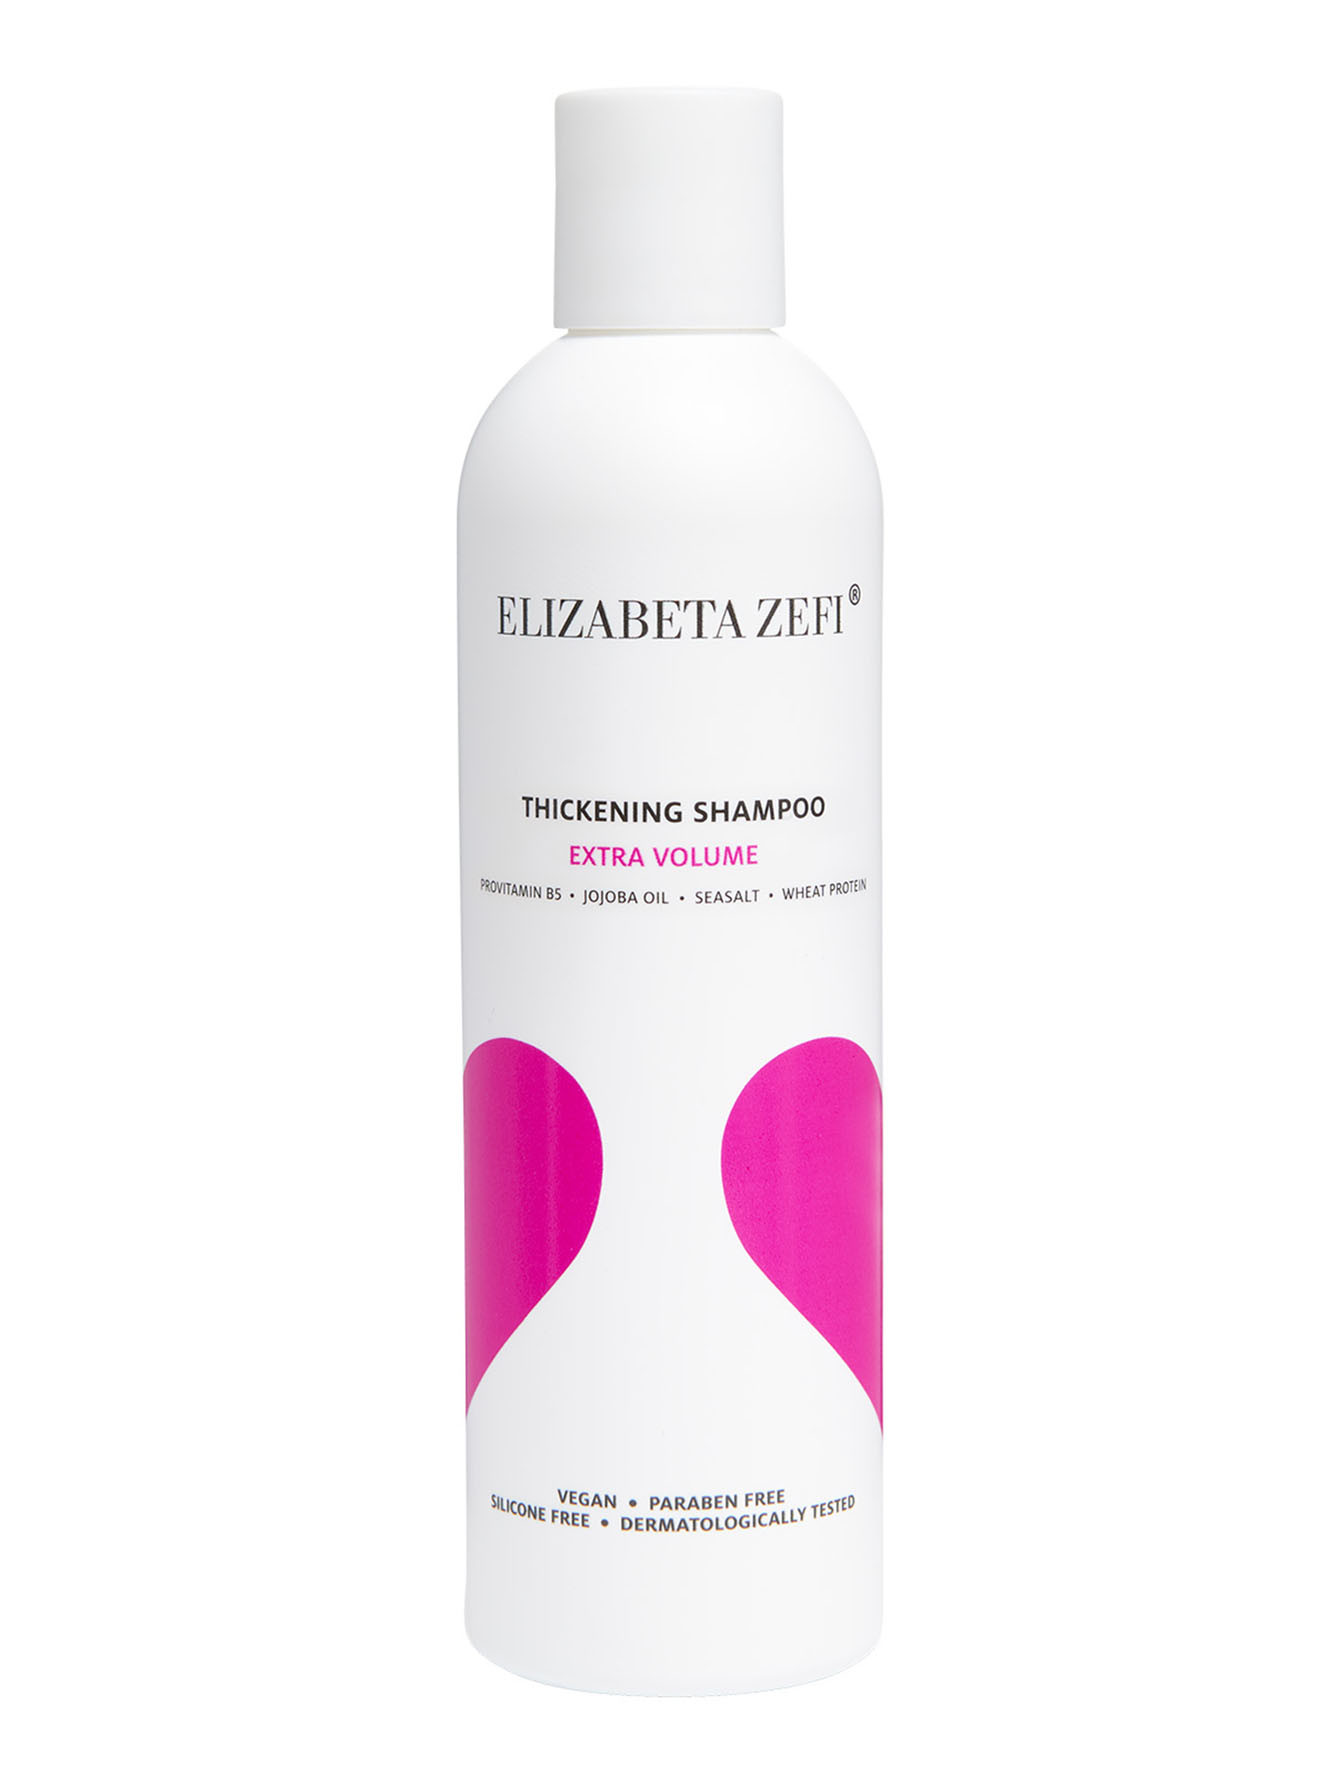 Уплотняющий шампунь для волос Thickening Shampoo, 250 мл - Общий вид